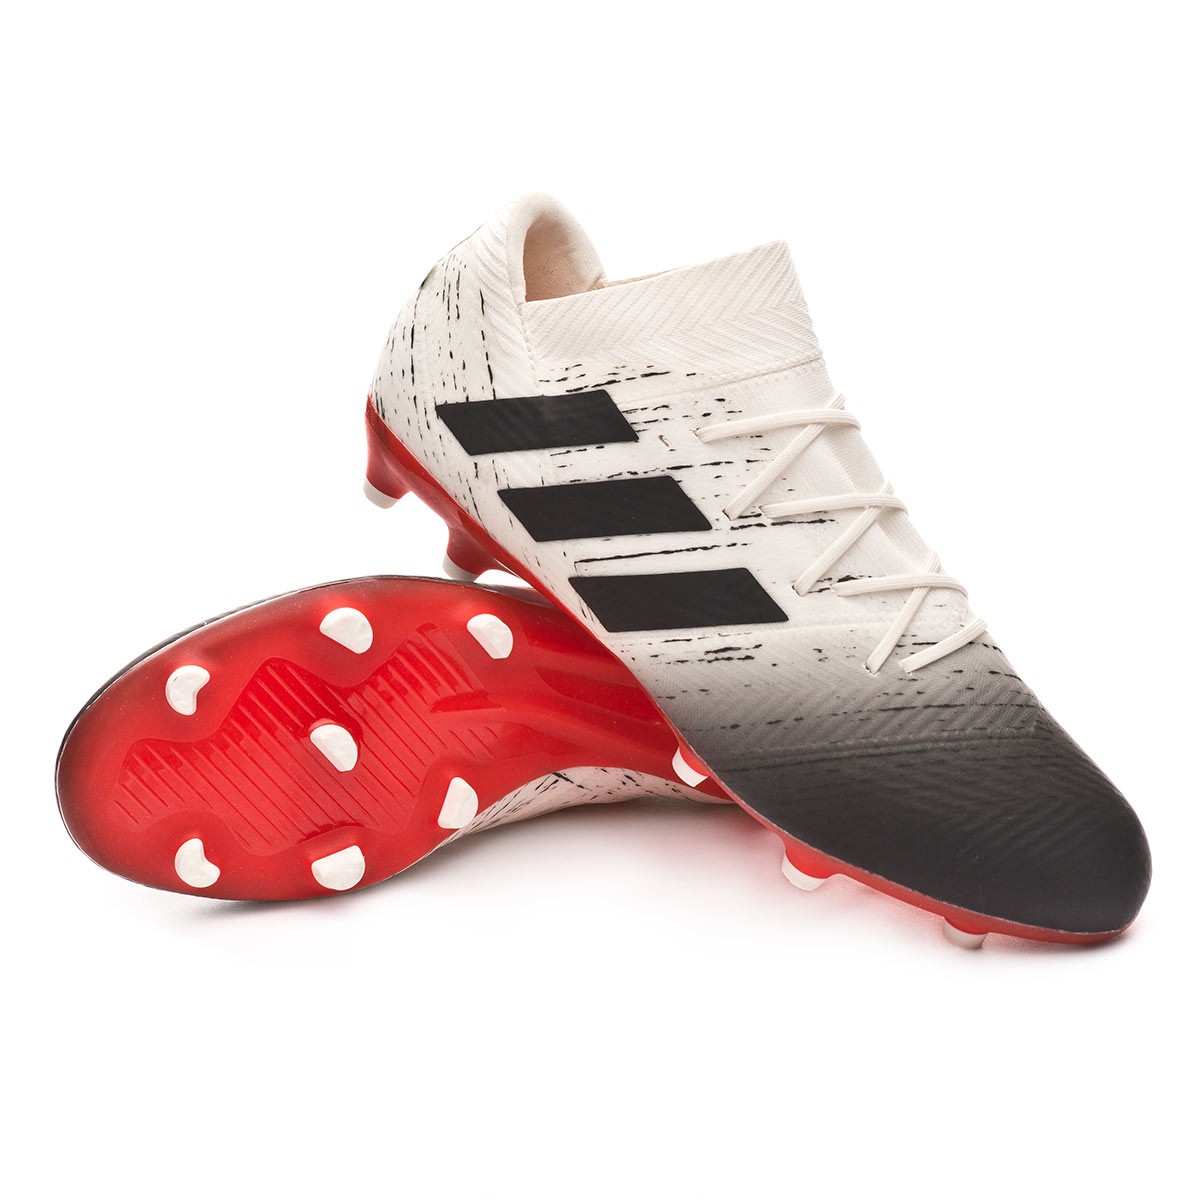 Football Boots adidas Nemeziz 18.2 FG Off white-Core black-Active red -  Football store Fútbol Emotion